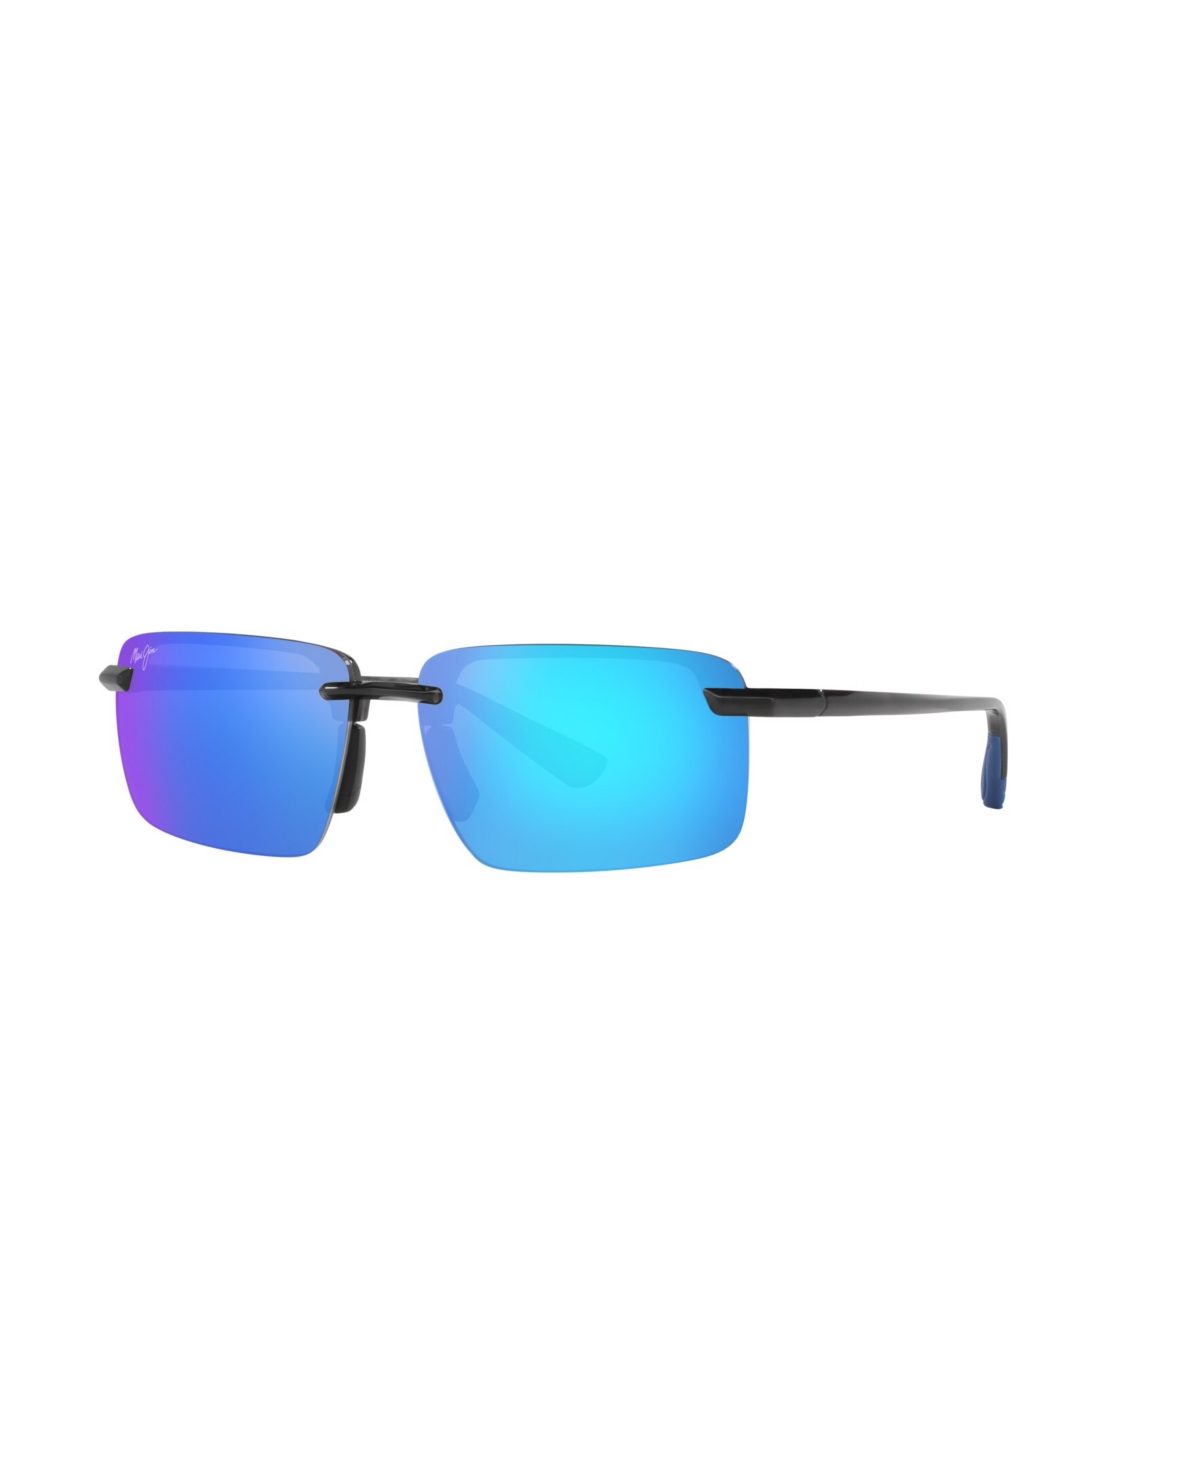 Men's Polarized Sunglasses, Laulima - Grey Clear